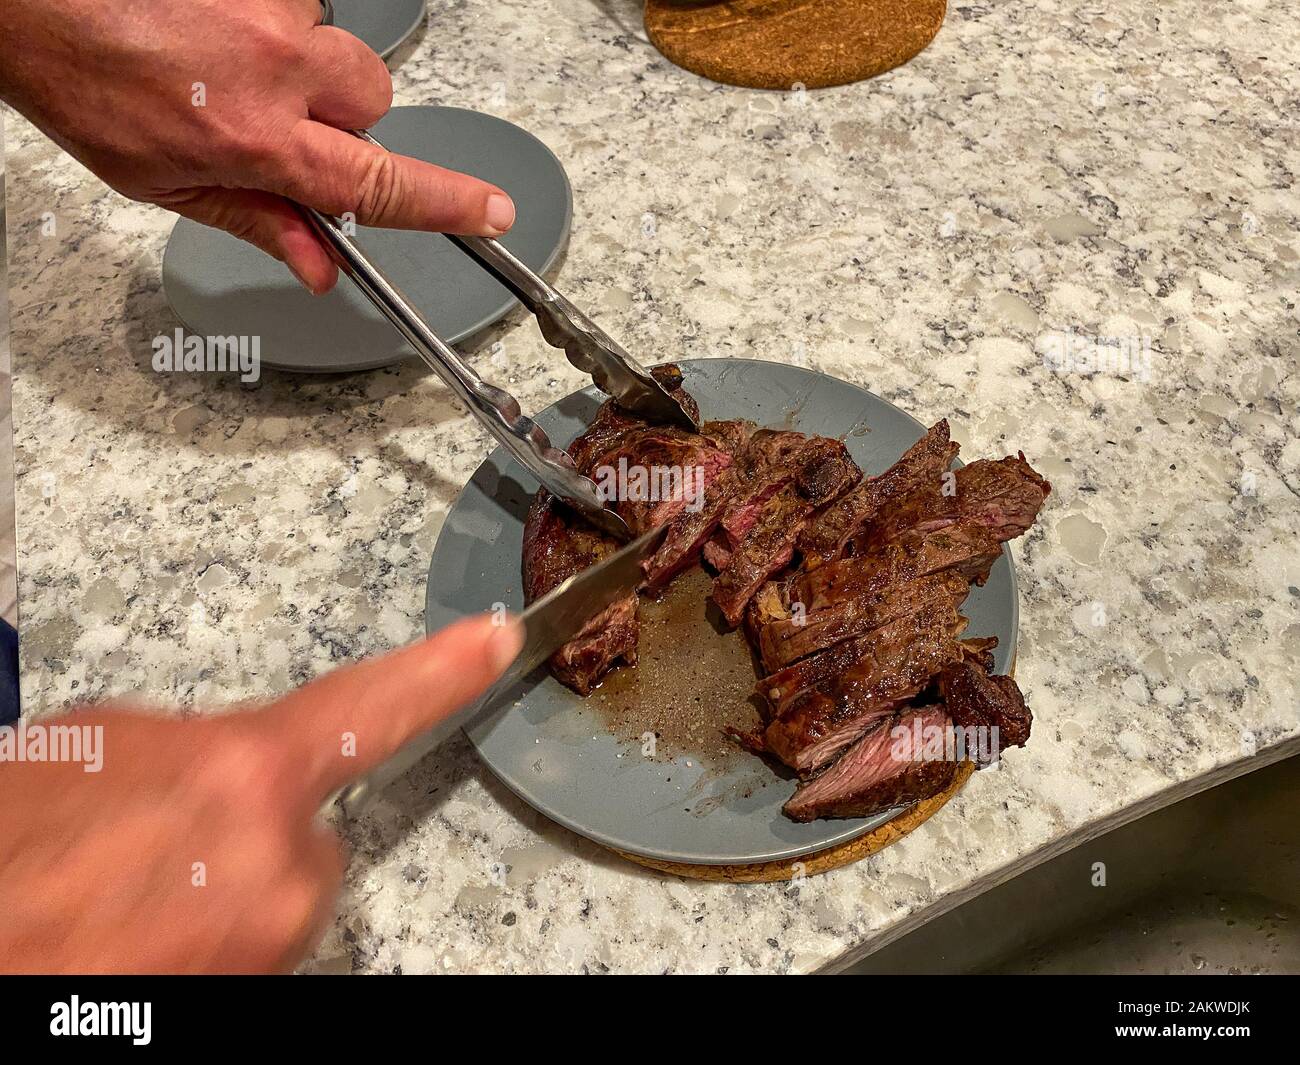 https://c8.alamy.com/comp/2AKWDJK/a-man-cutting-a-ribeye-steak-on-a-blue-plate-in-preparing-to-serve-it-for-dinner-2AKWDJK.jpg